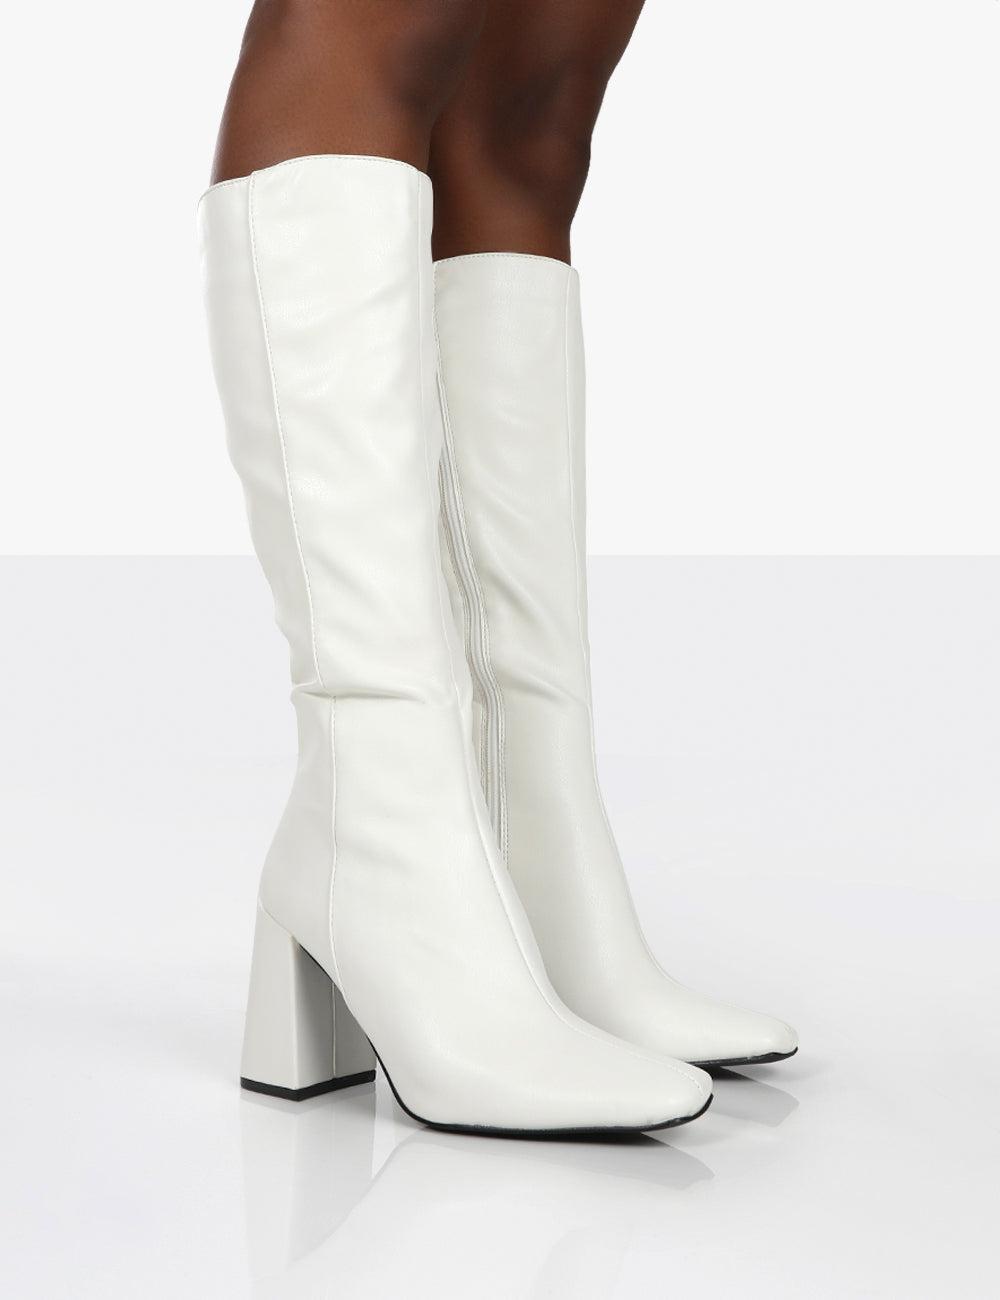 Public Desire US Apology White Pu Knee High Block Heel Boots - female Product Image